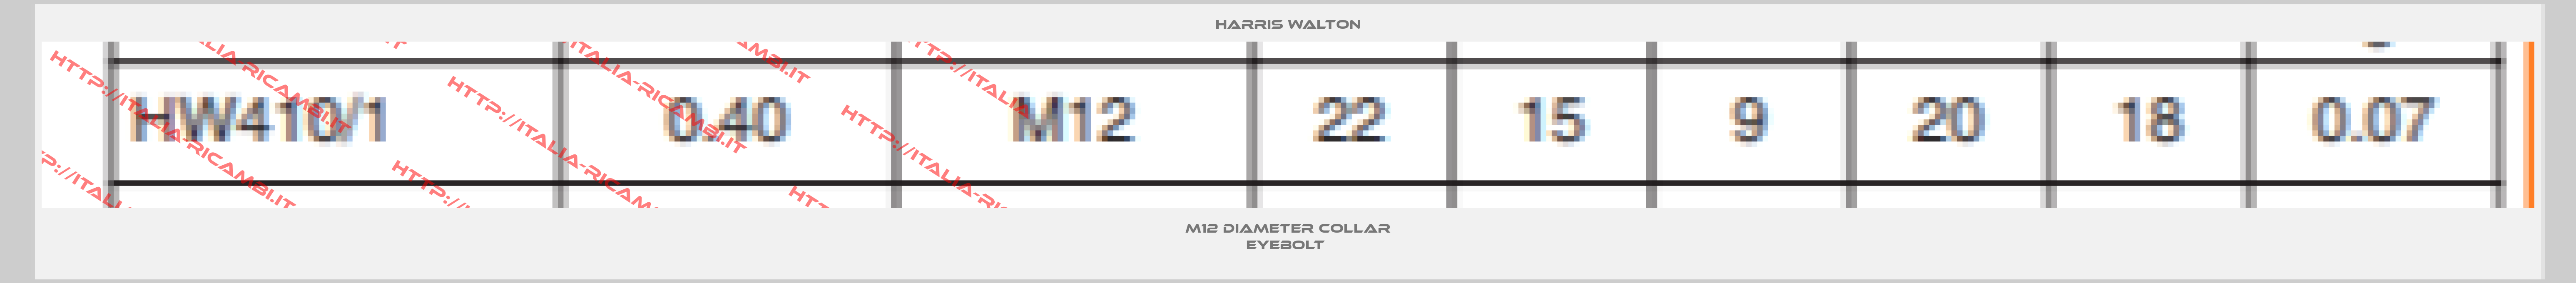 HARRIS WALTON-M12 Diameter Collar Eyebolt 